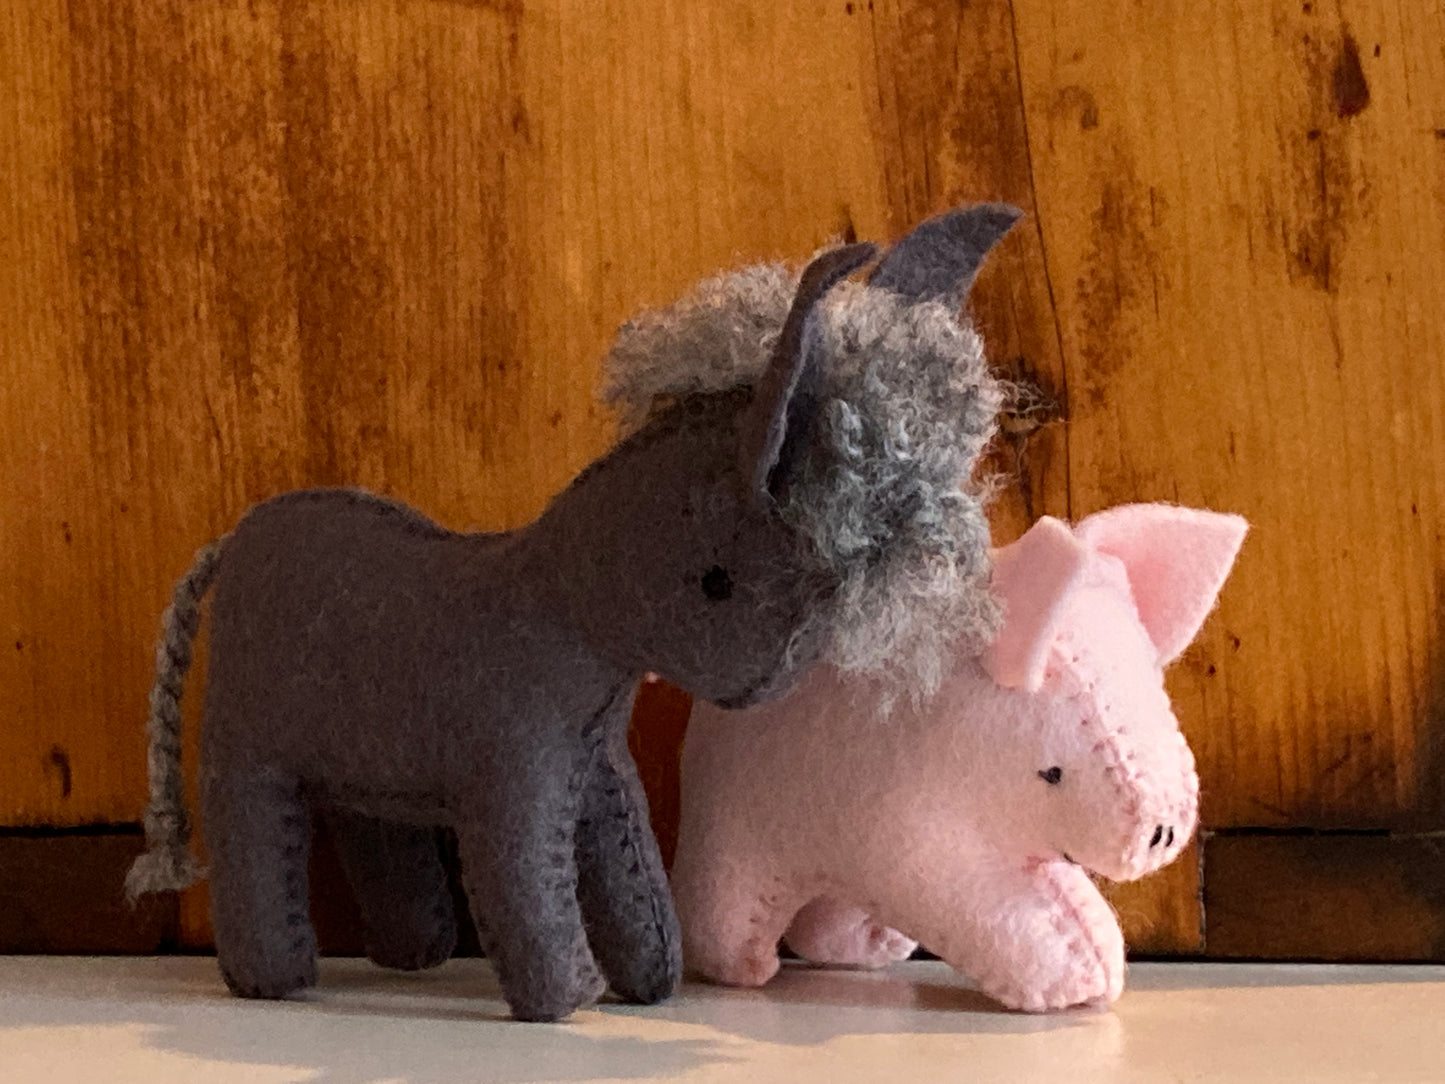 Dollhouse Soft Toy - FELT PINK PIG